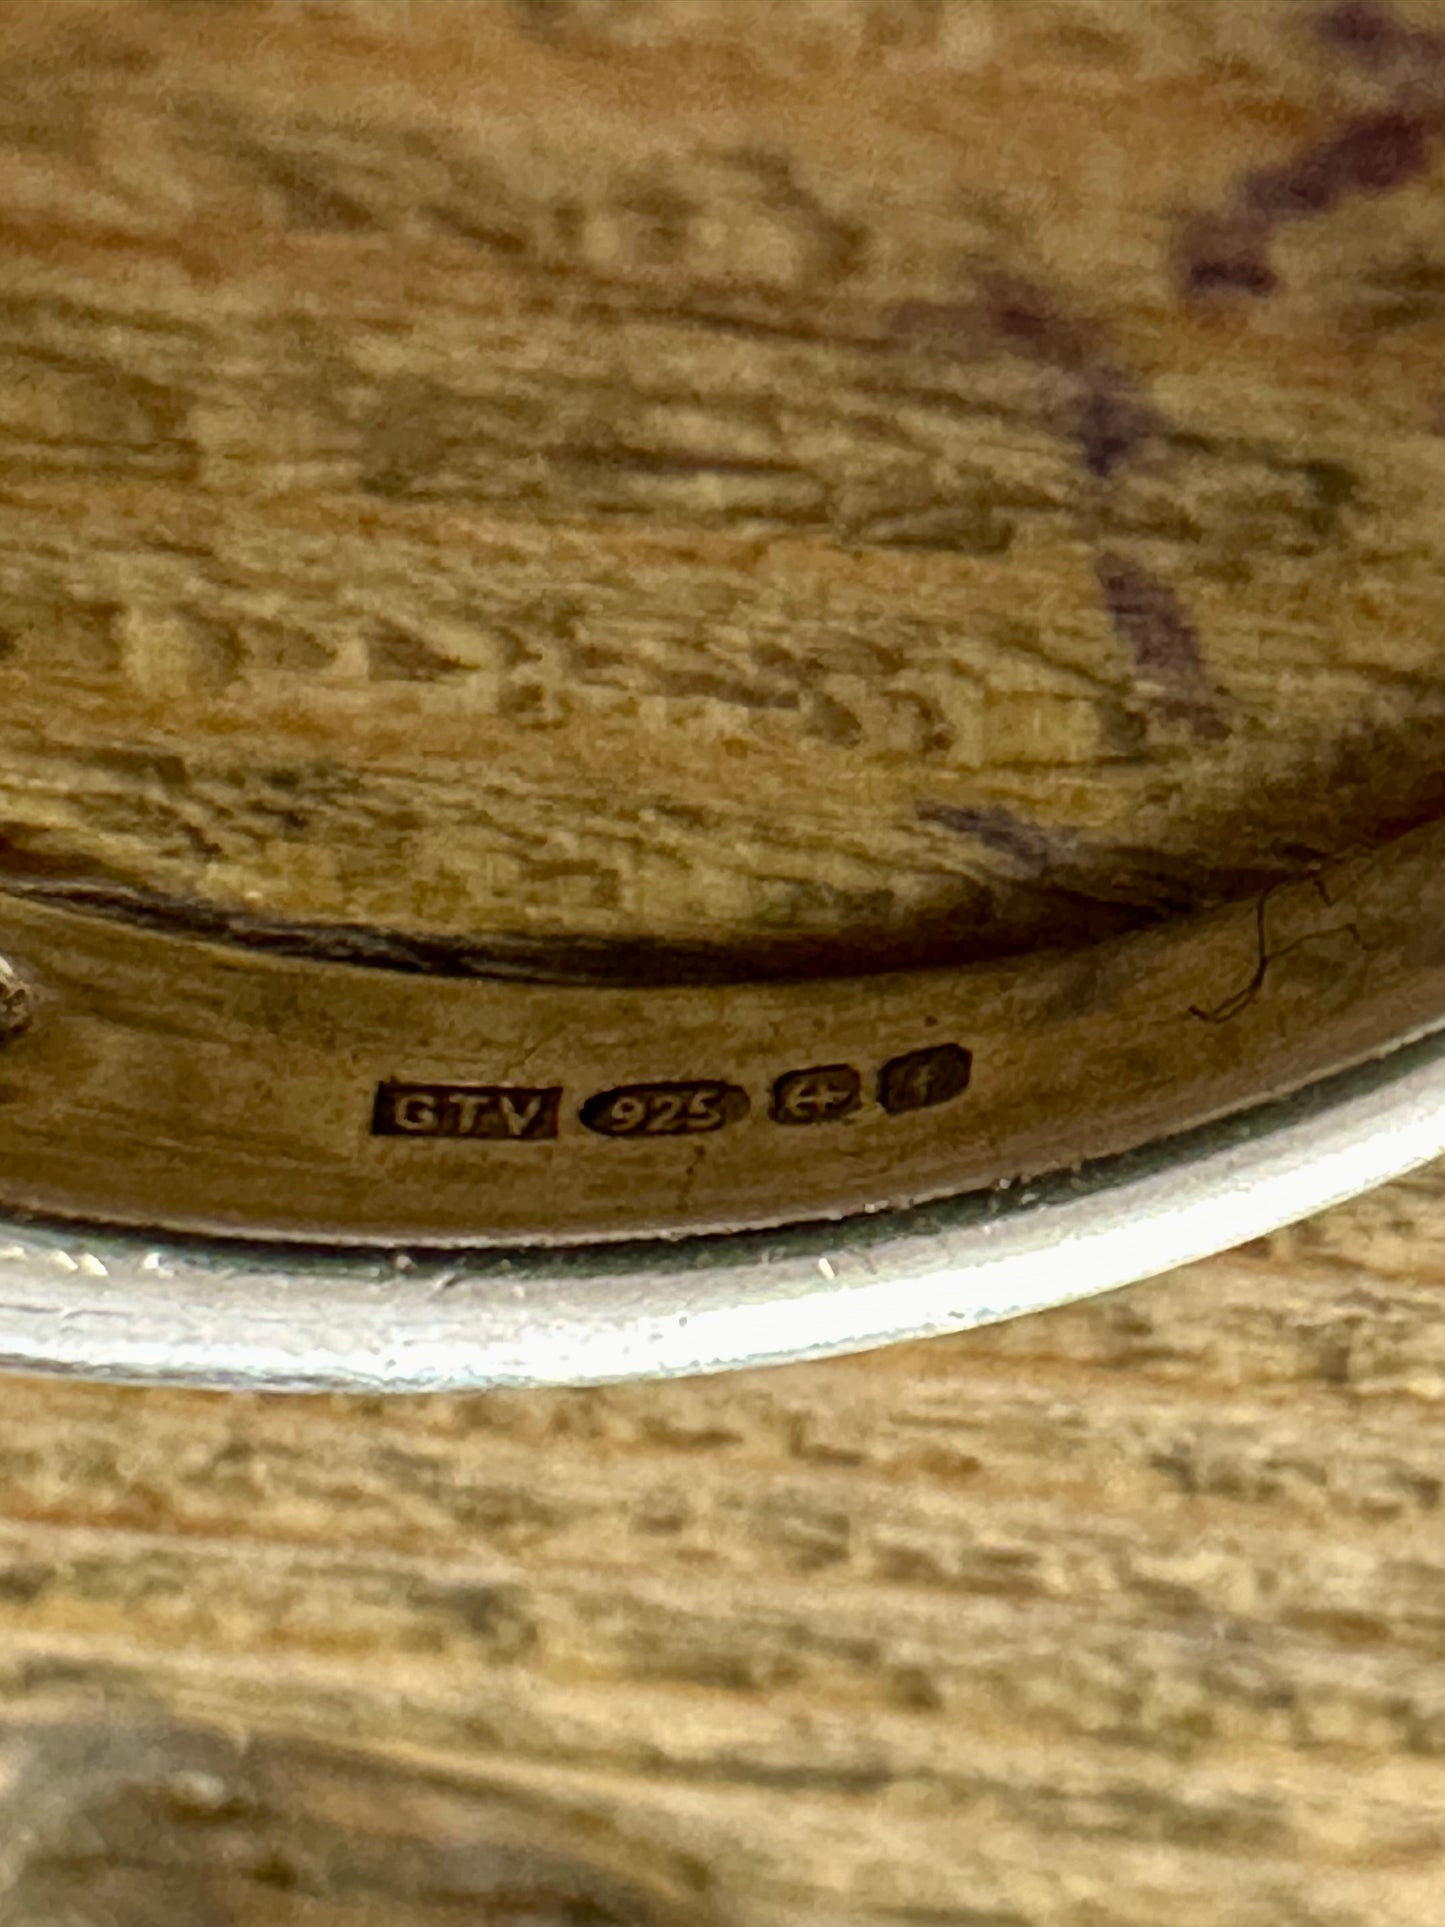 Modern 2005 Labrodorite Ornate 925 Silver Size O Ring